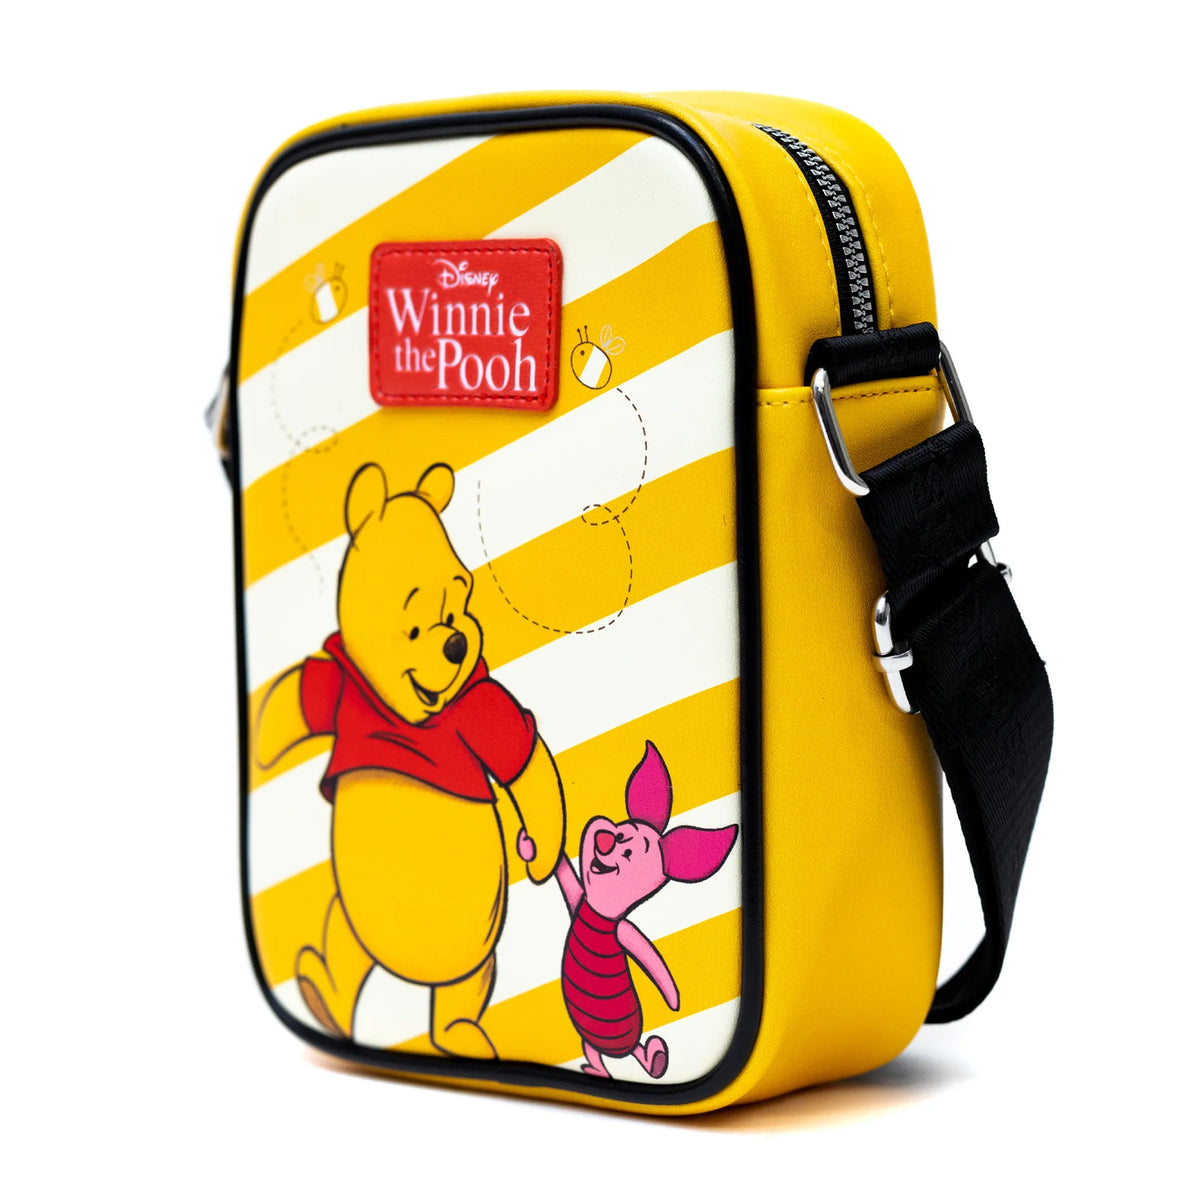 Disney Winnie the Pooh Crossbody Bag